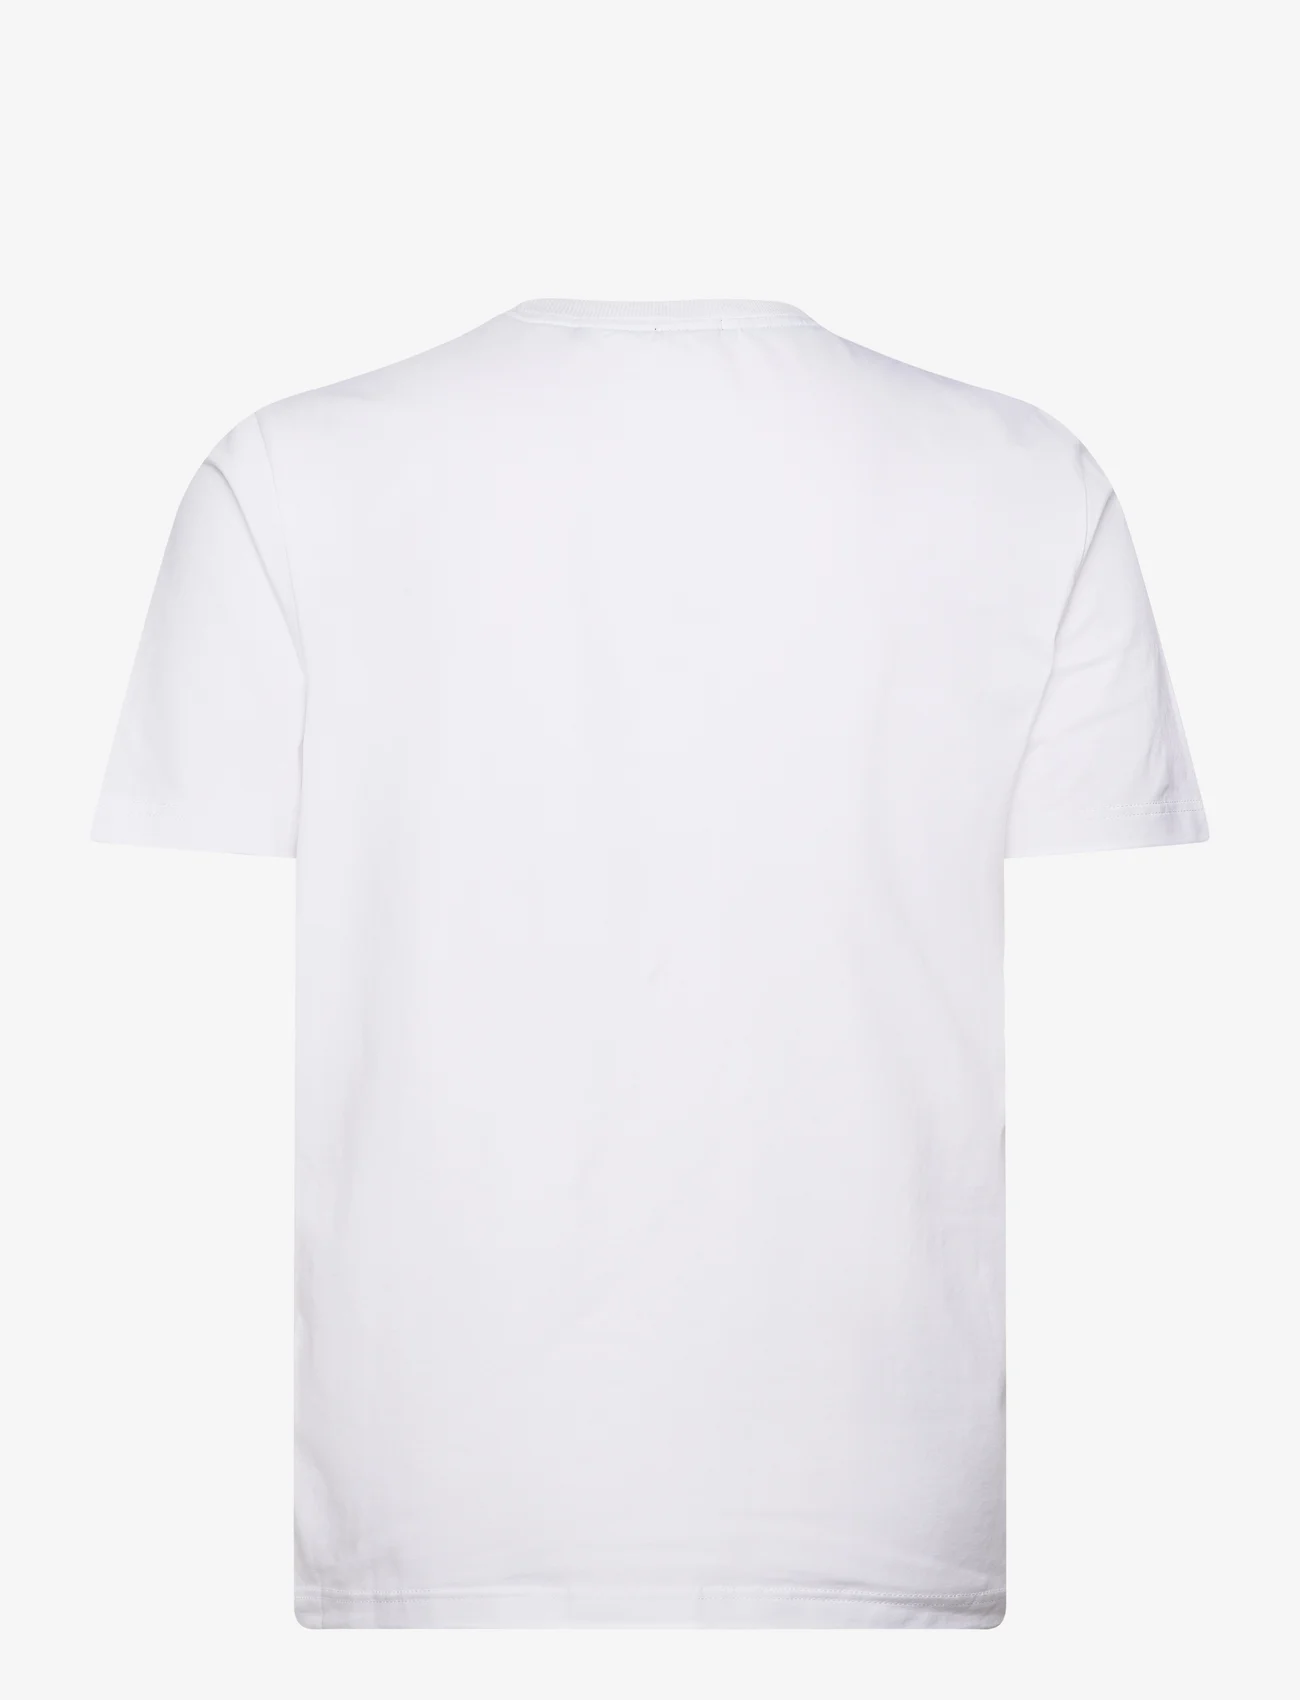 BOSS - Tee Tape - short-sleeved t-shirts - white - 1